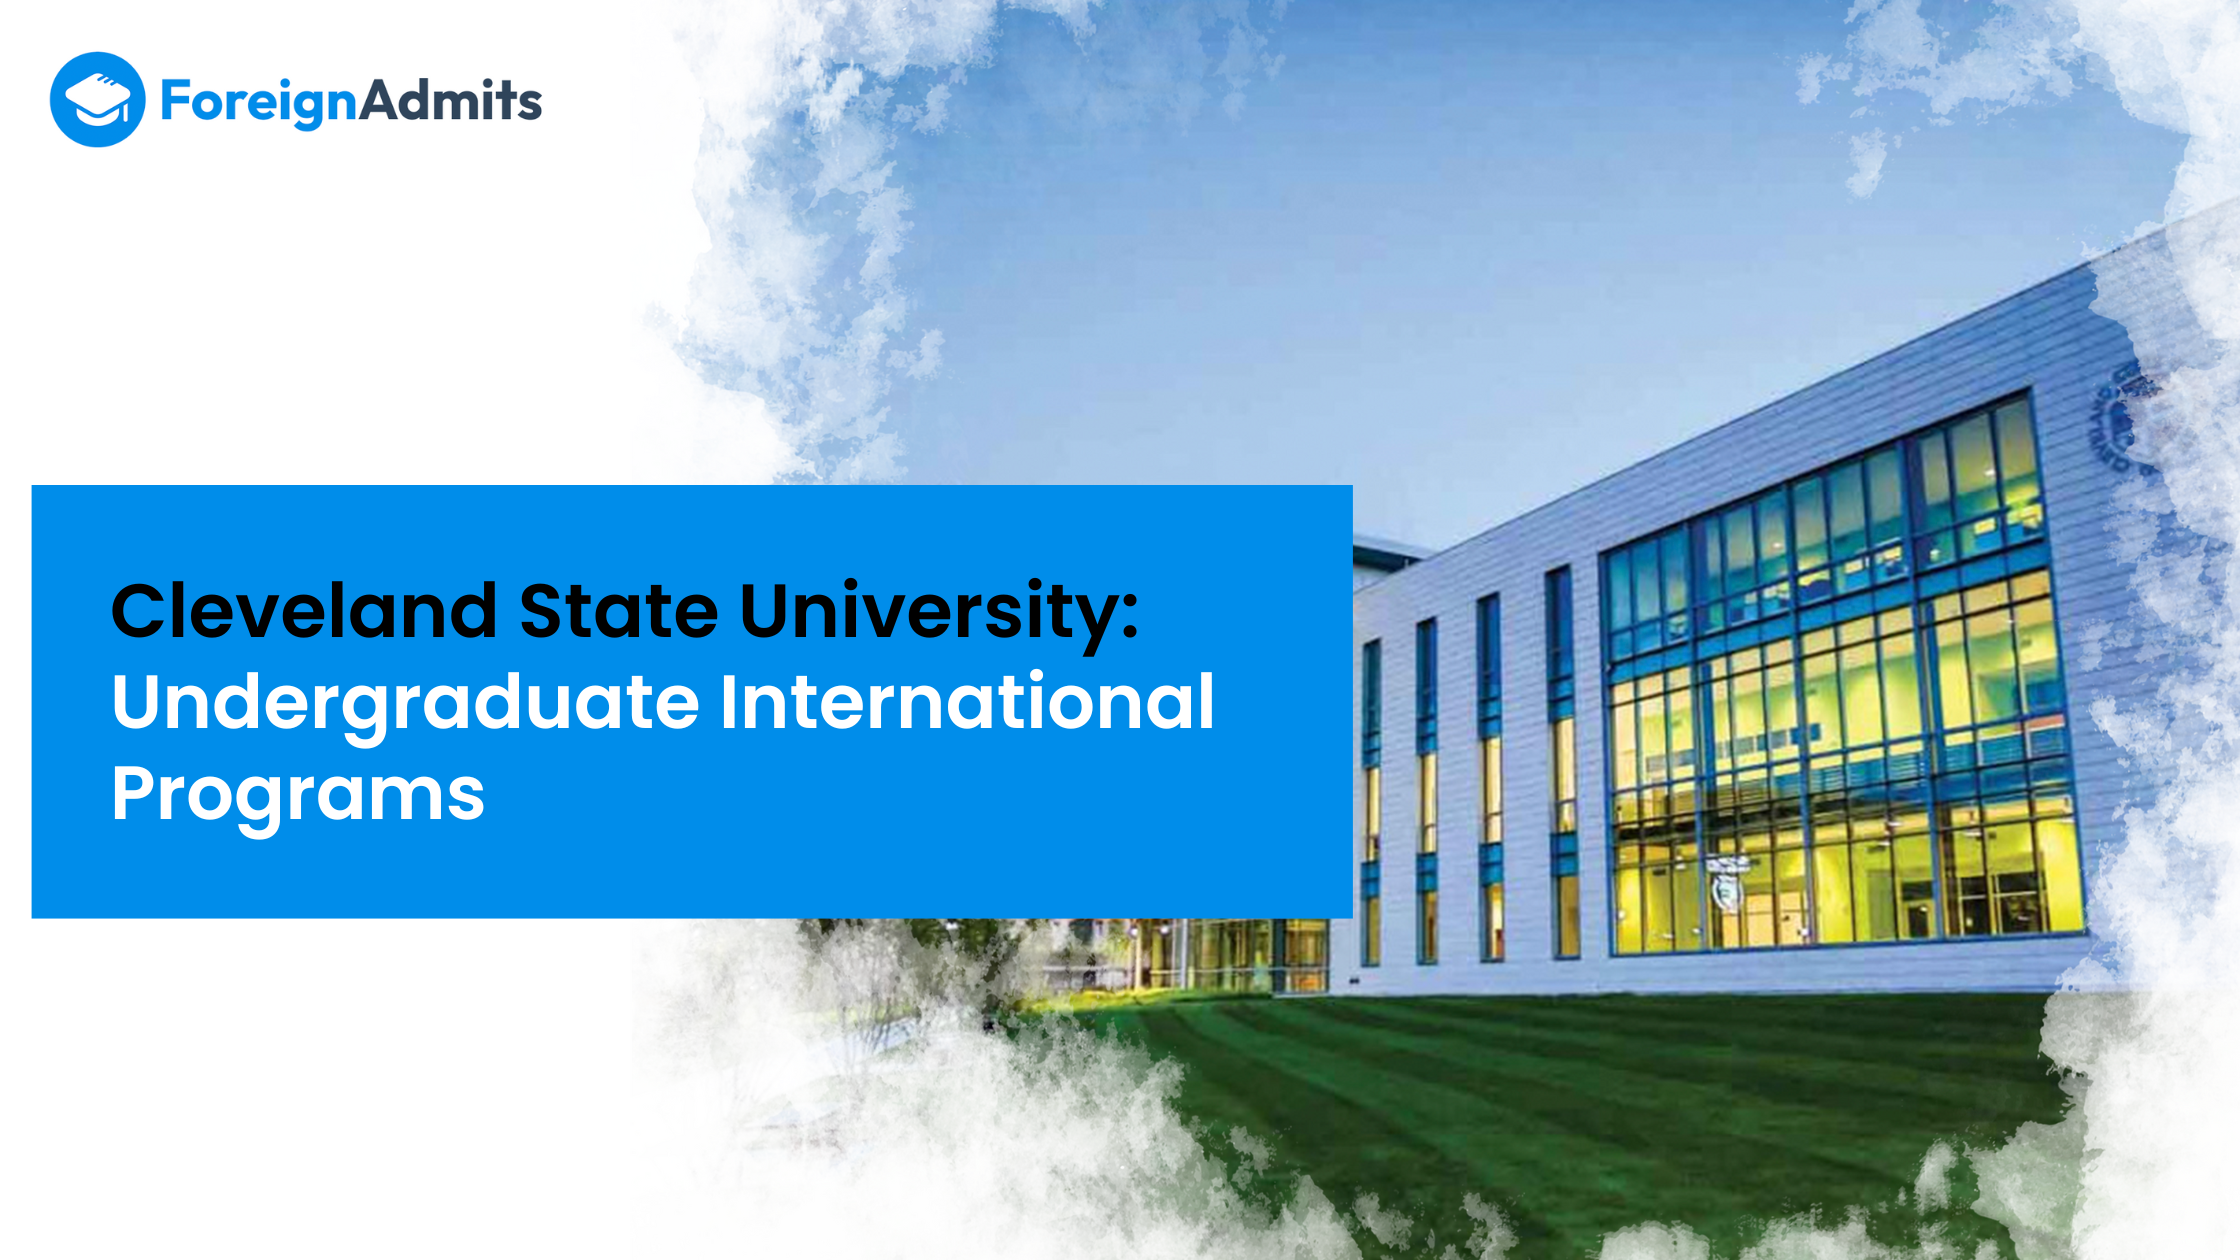 Cleveland State University: Undergraduate International Programs